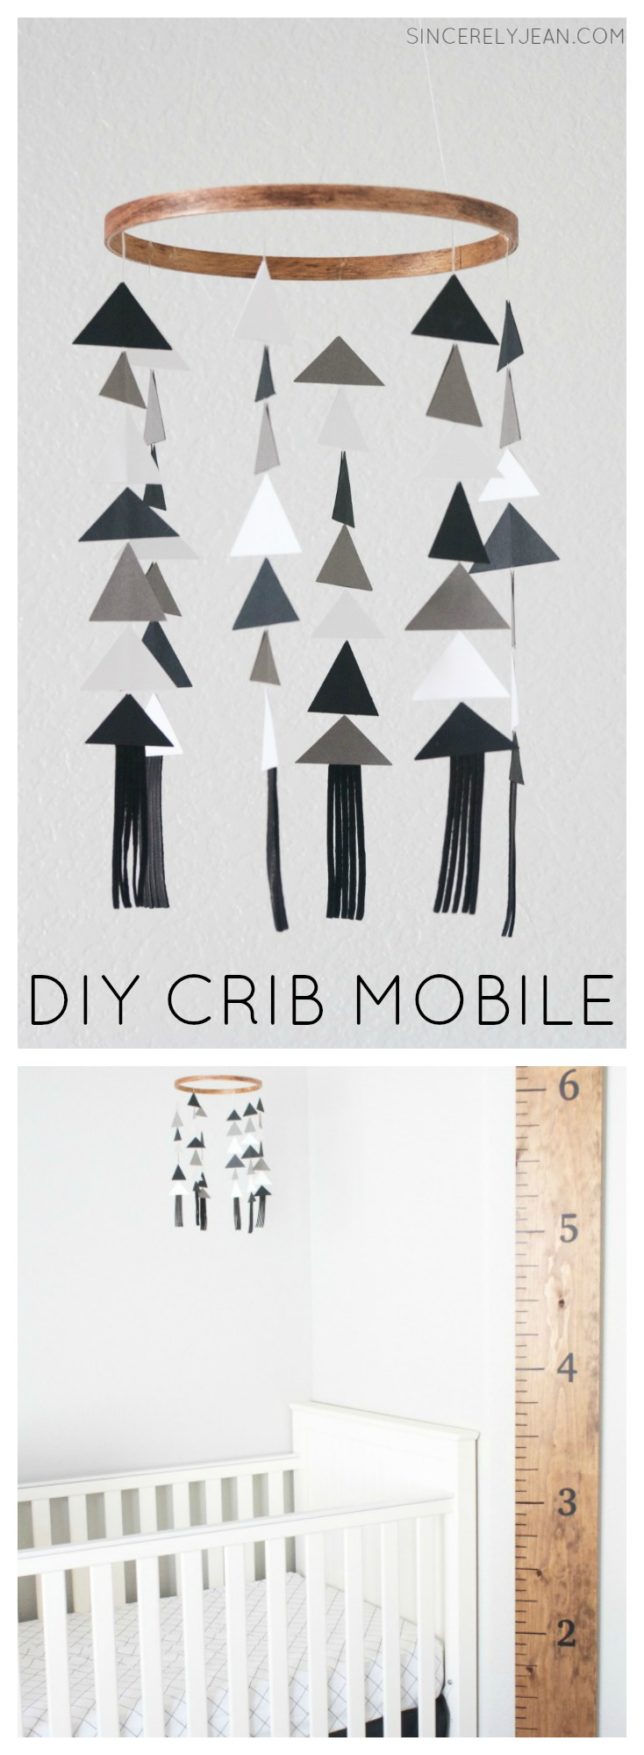 DIY crib mobile